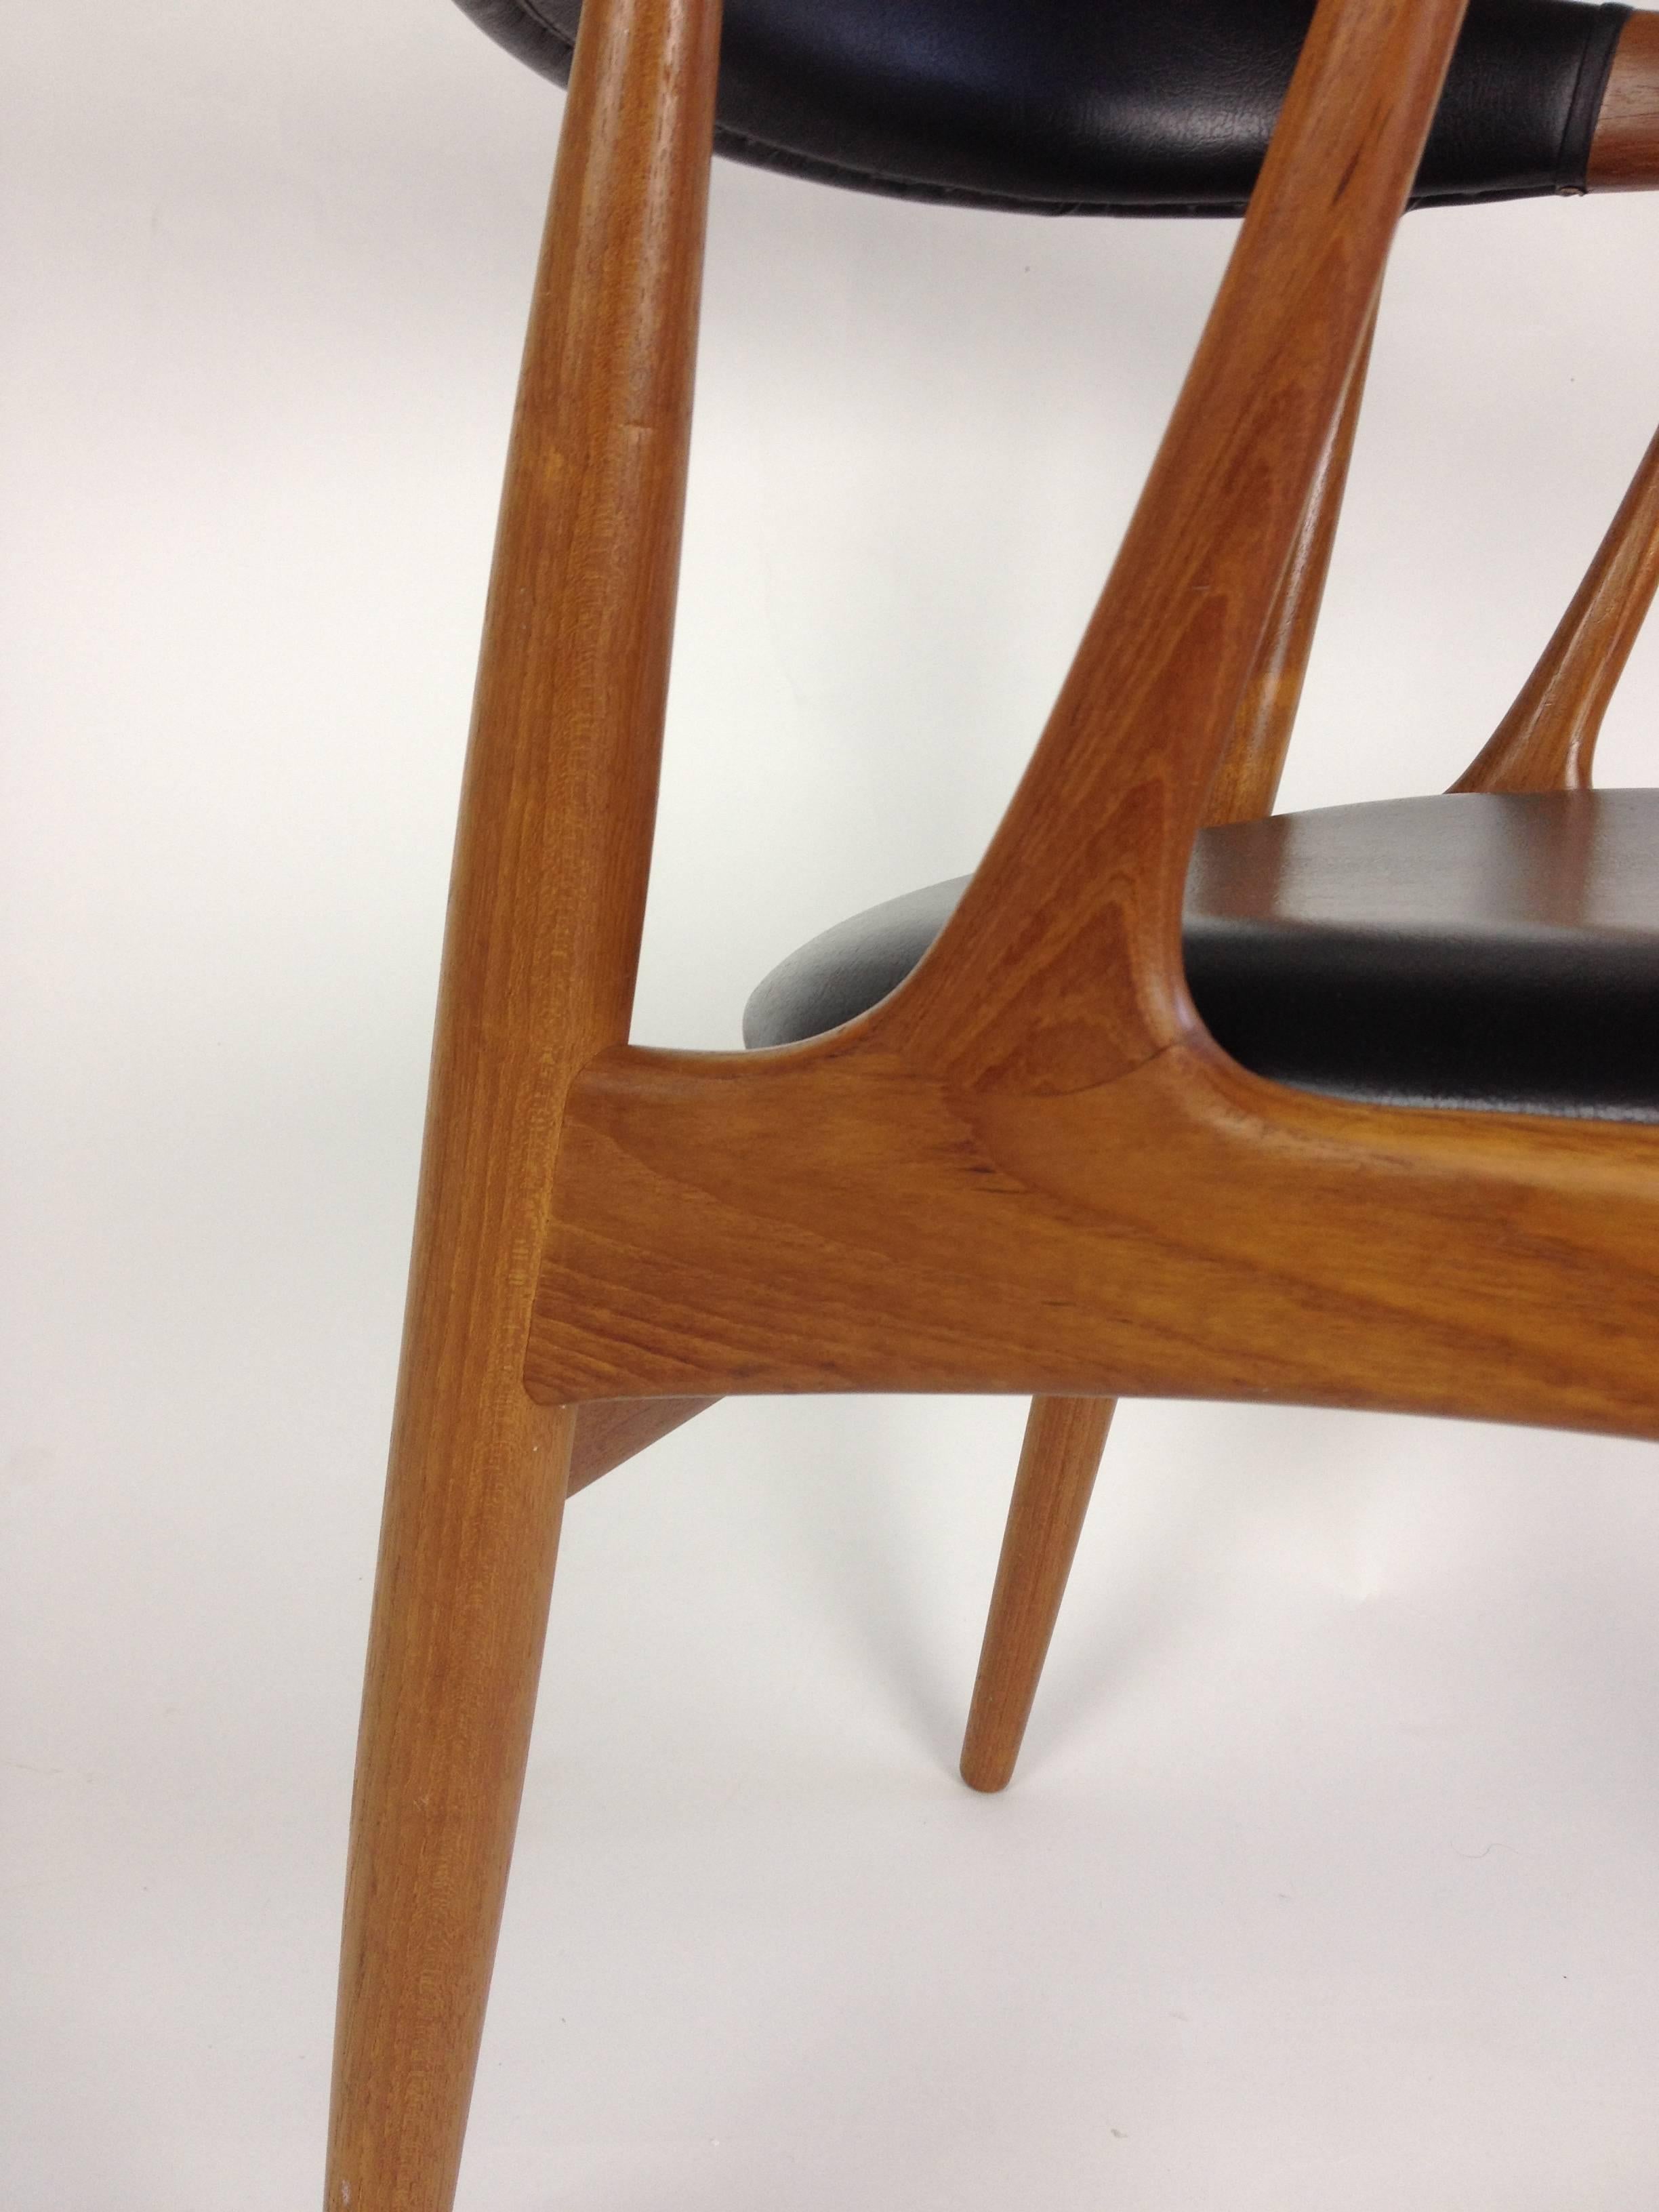 Striking Mid-Century Modern Teak Chair Designed by Johannes Andersen - Denmark For Sale 1